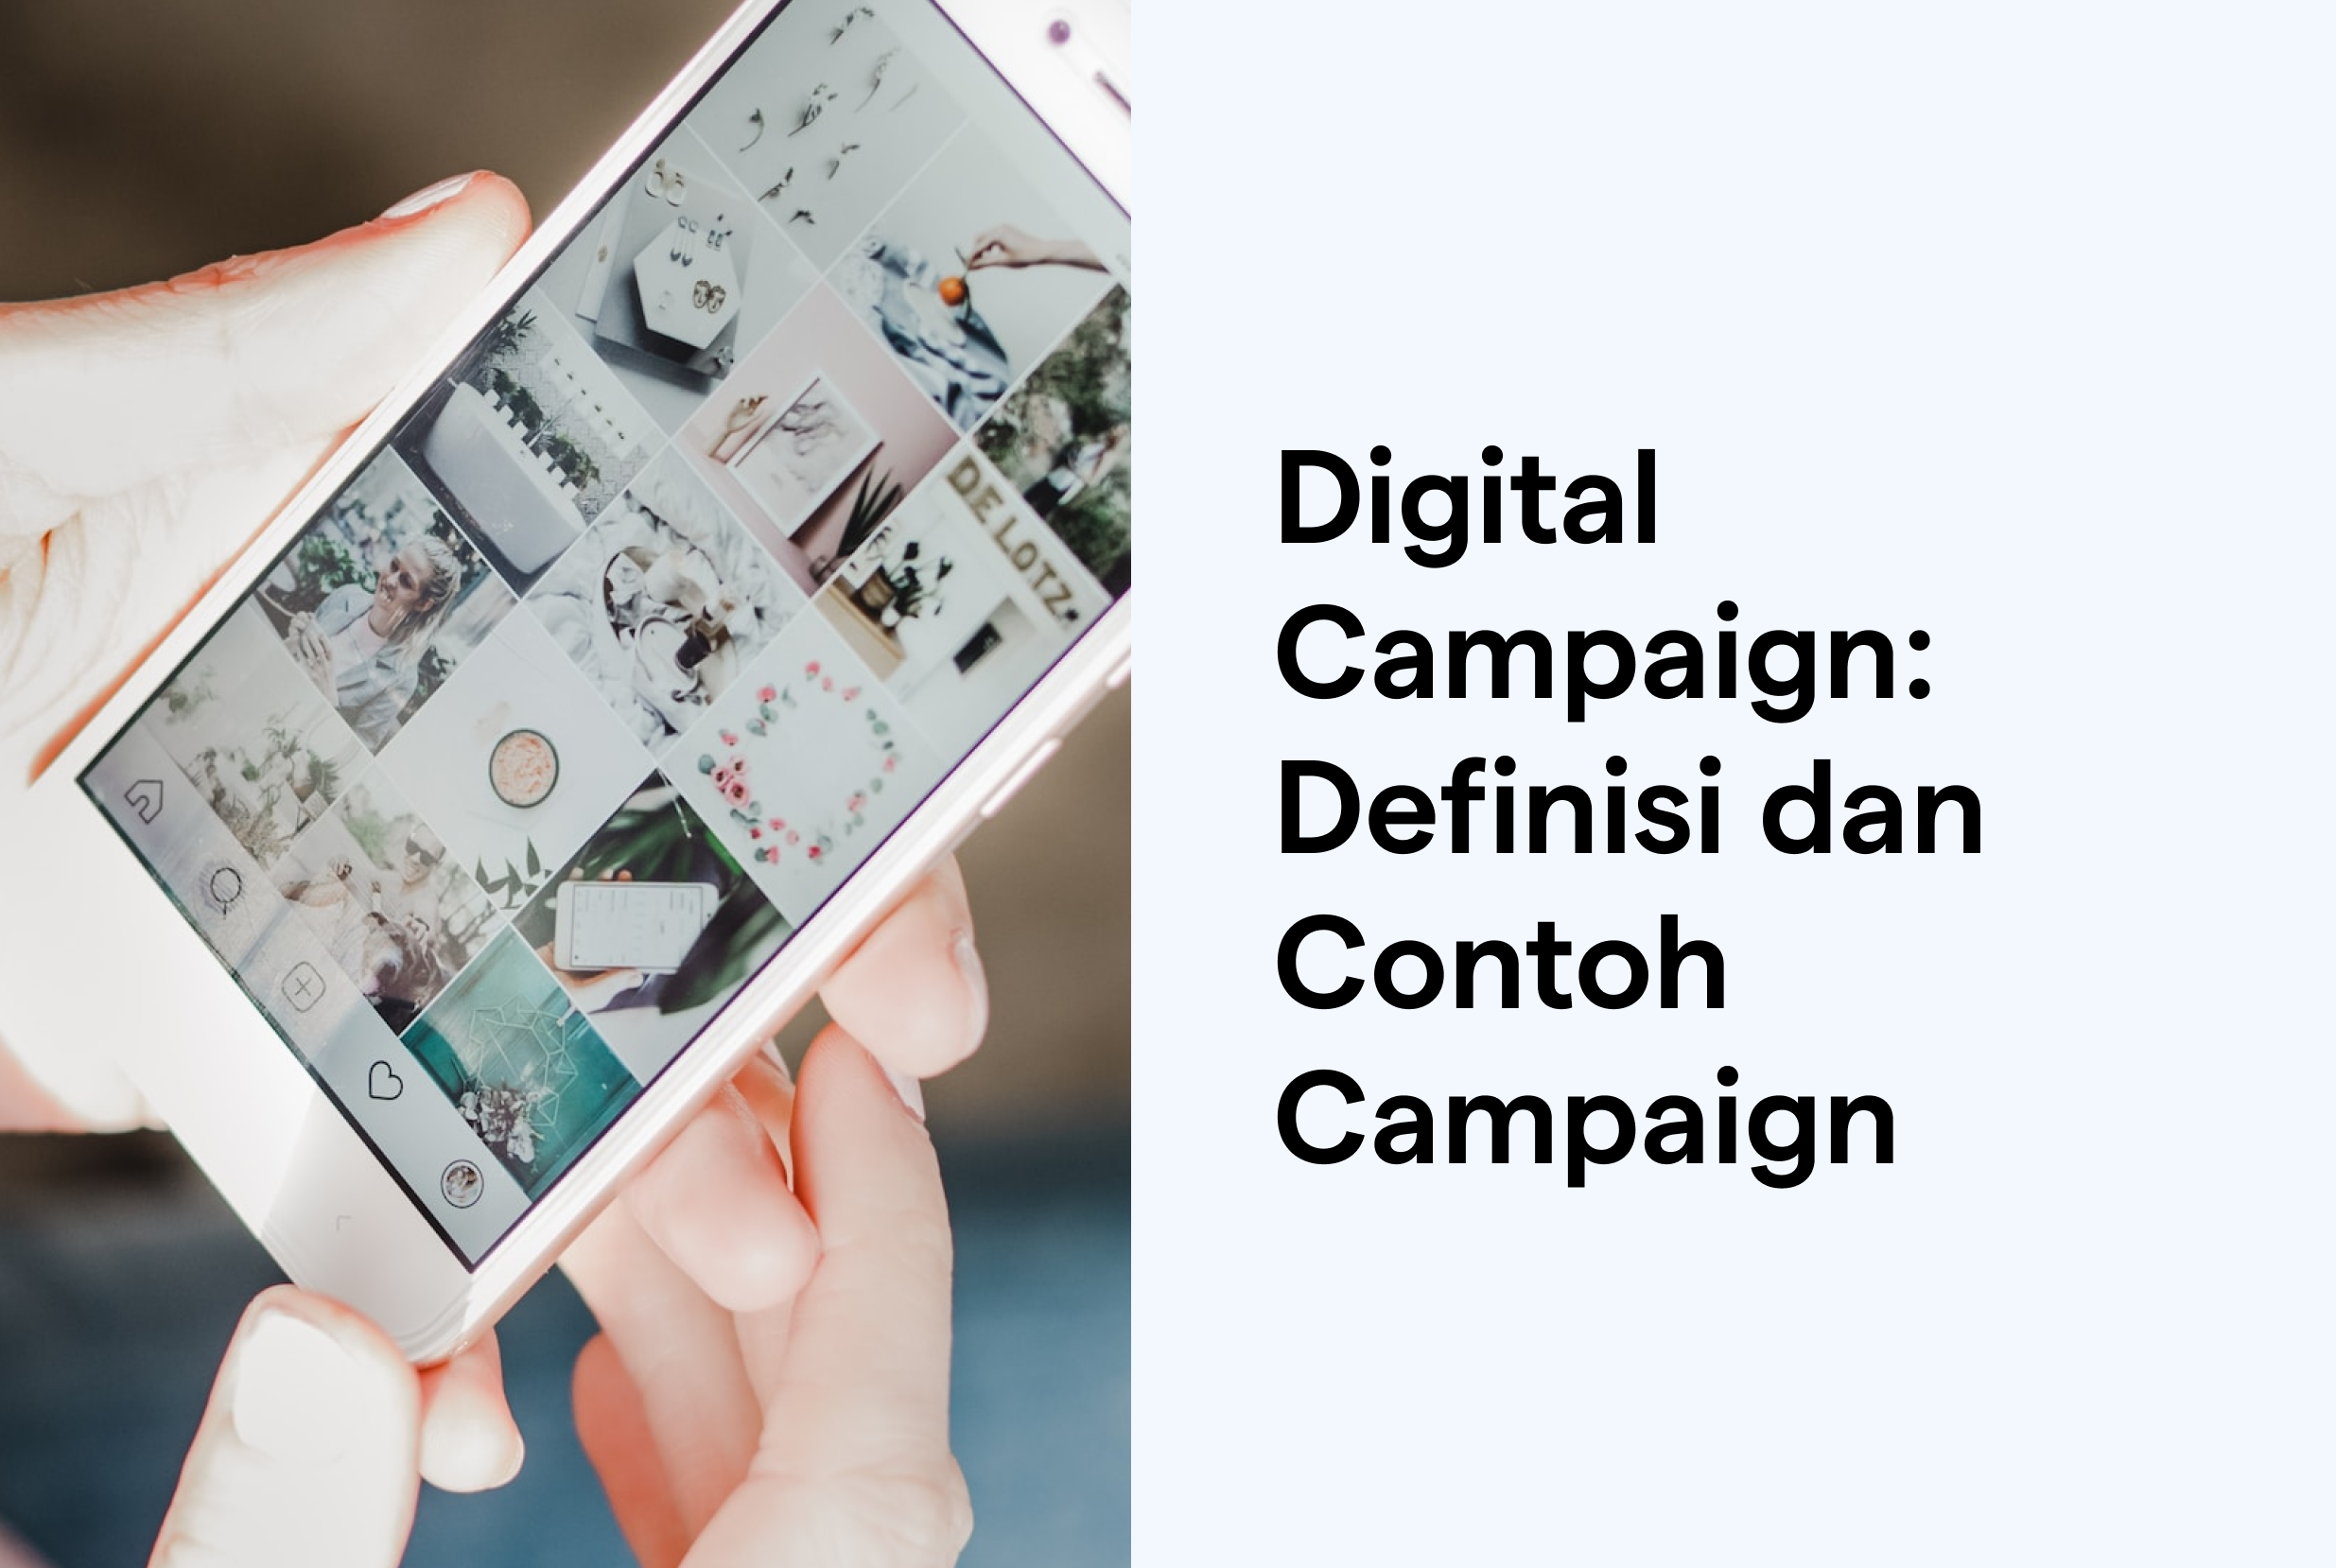 Digital Campaign: Definisi dan Contoh Campaign